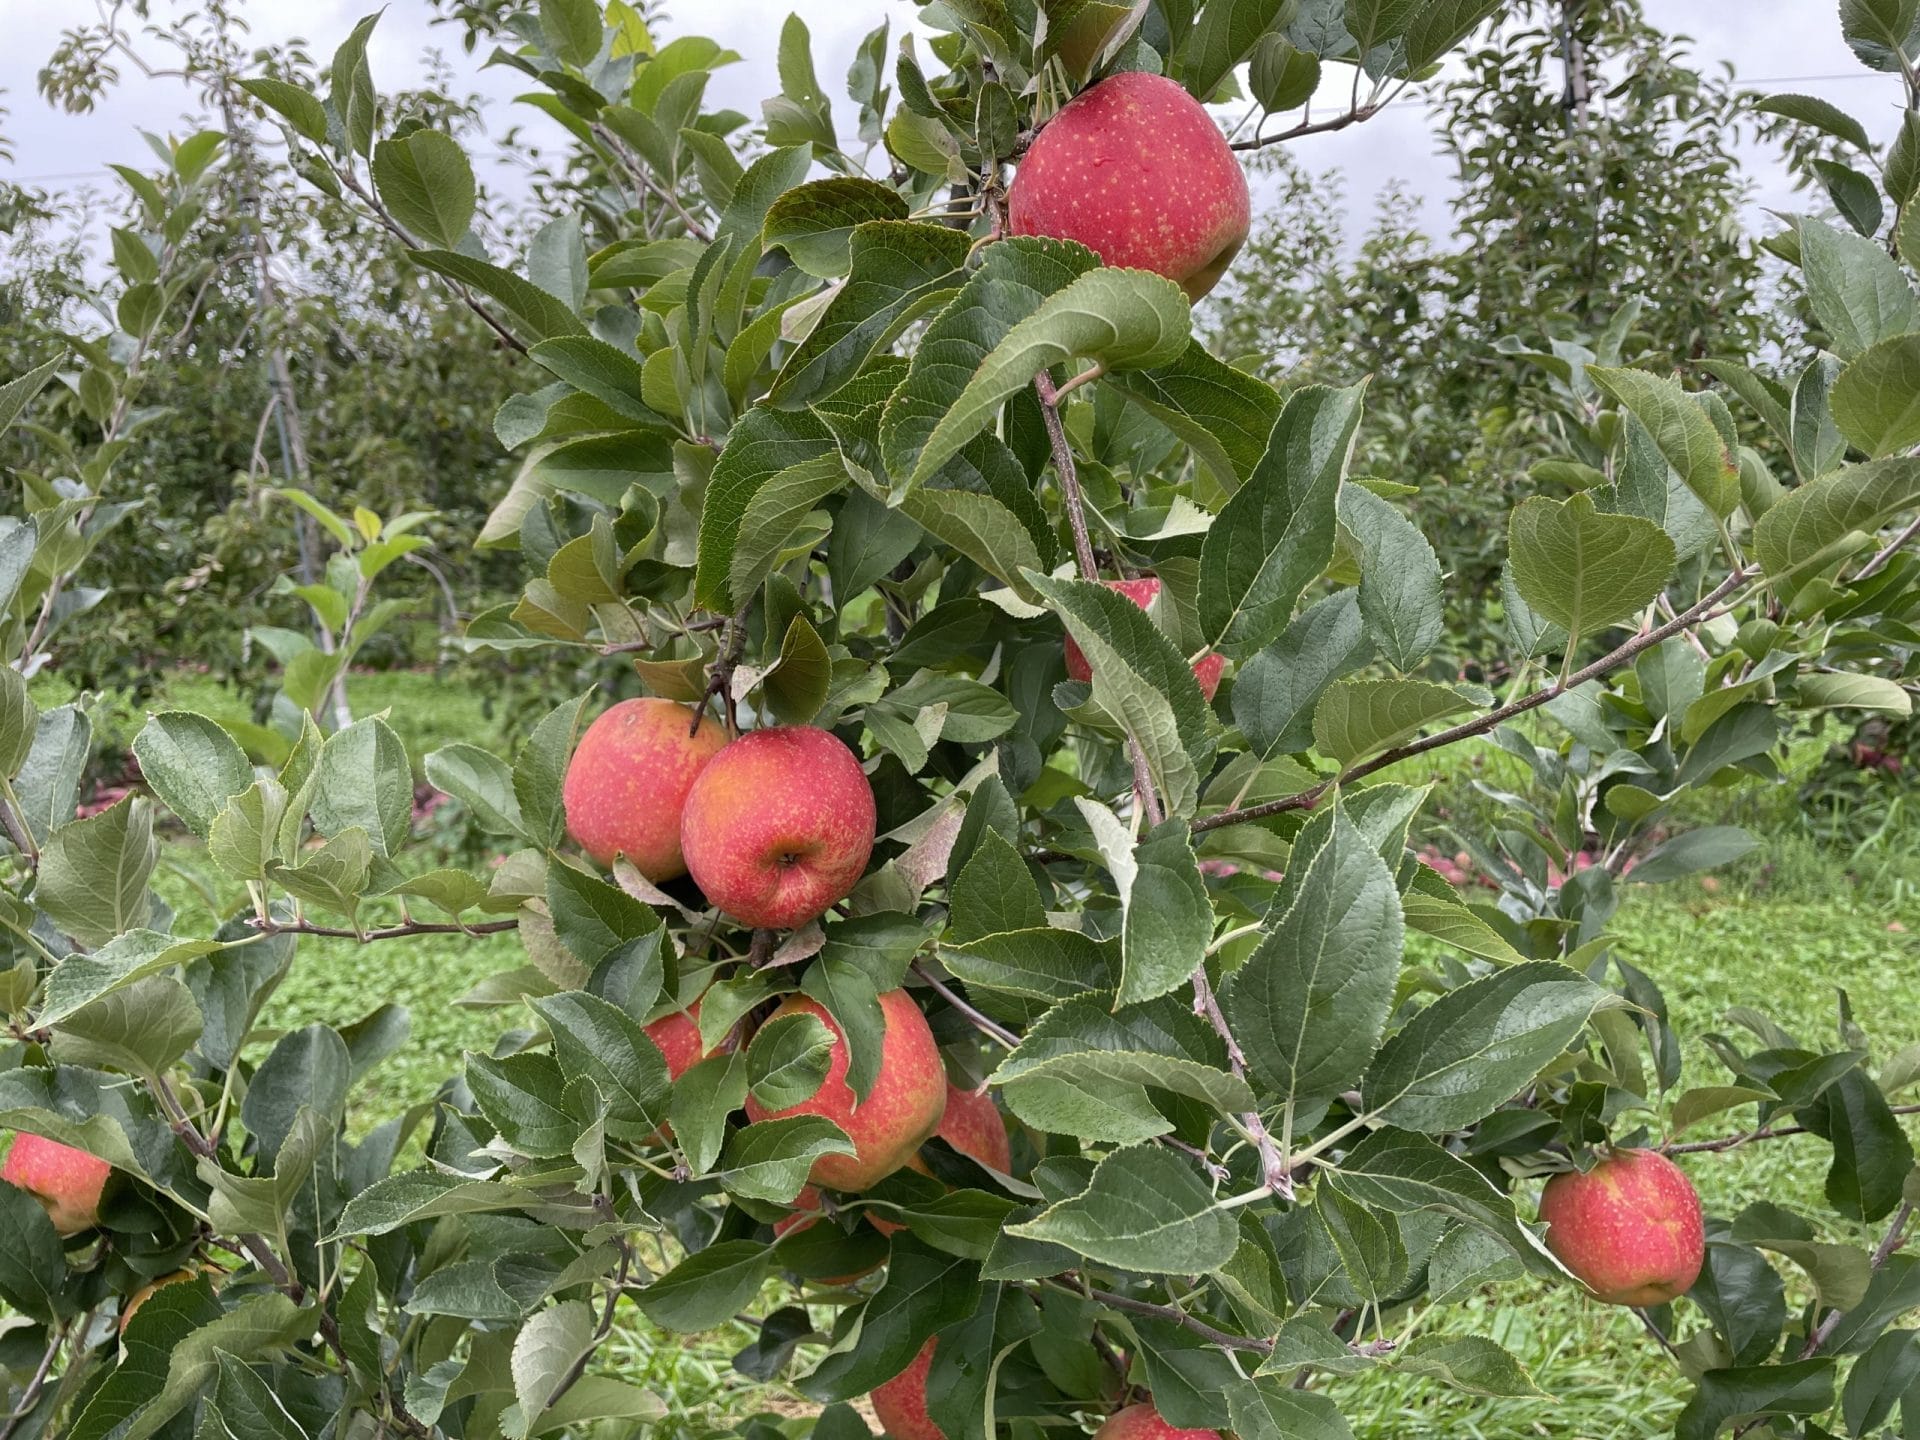 Boehm Farm Apple Picking